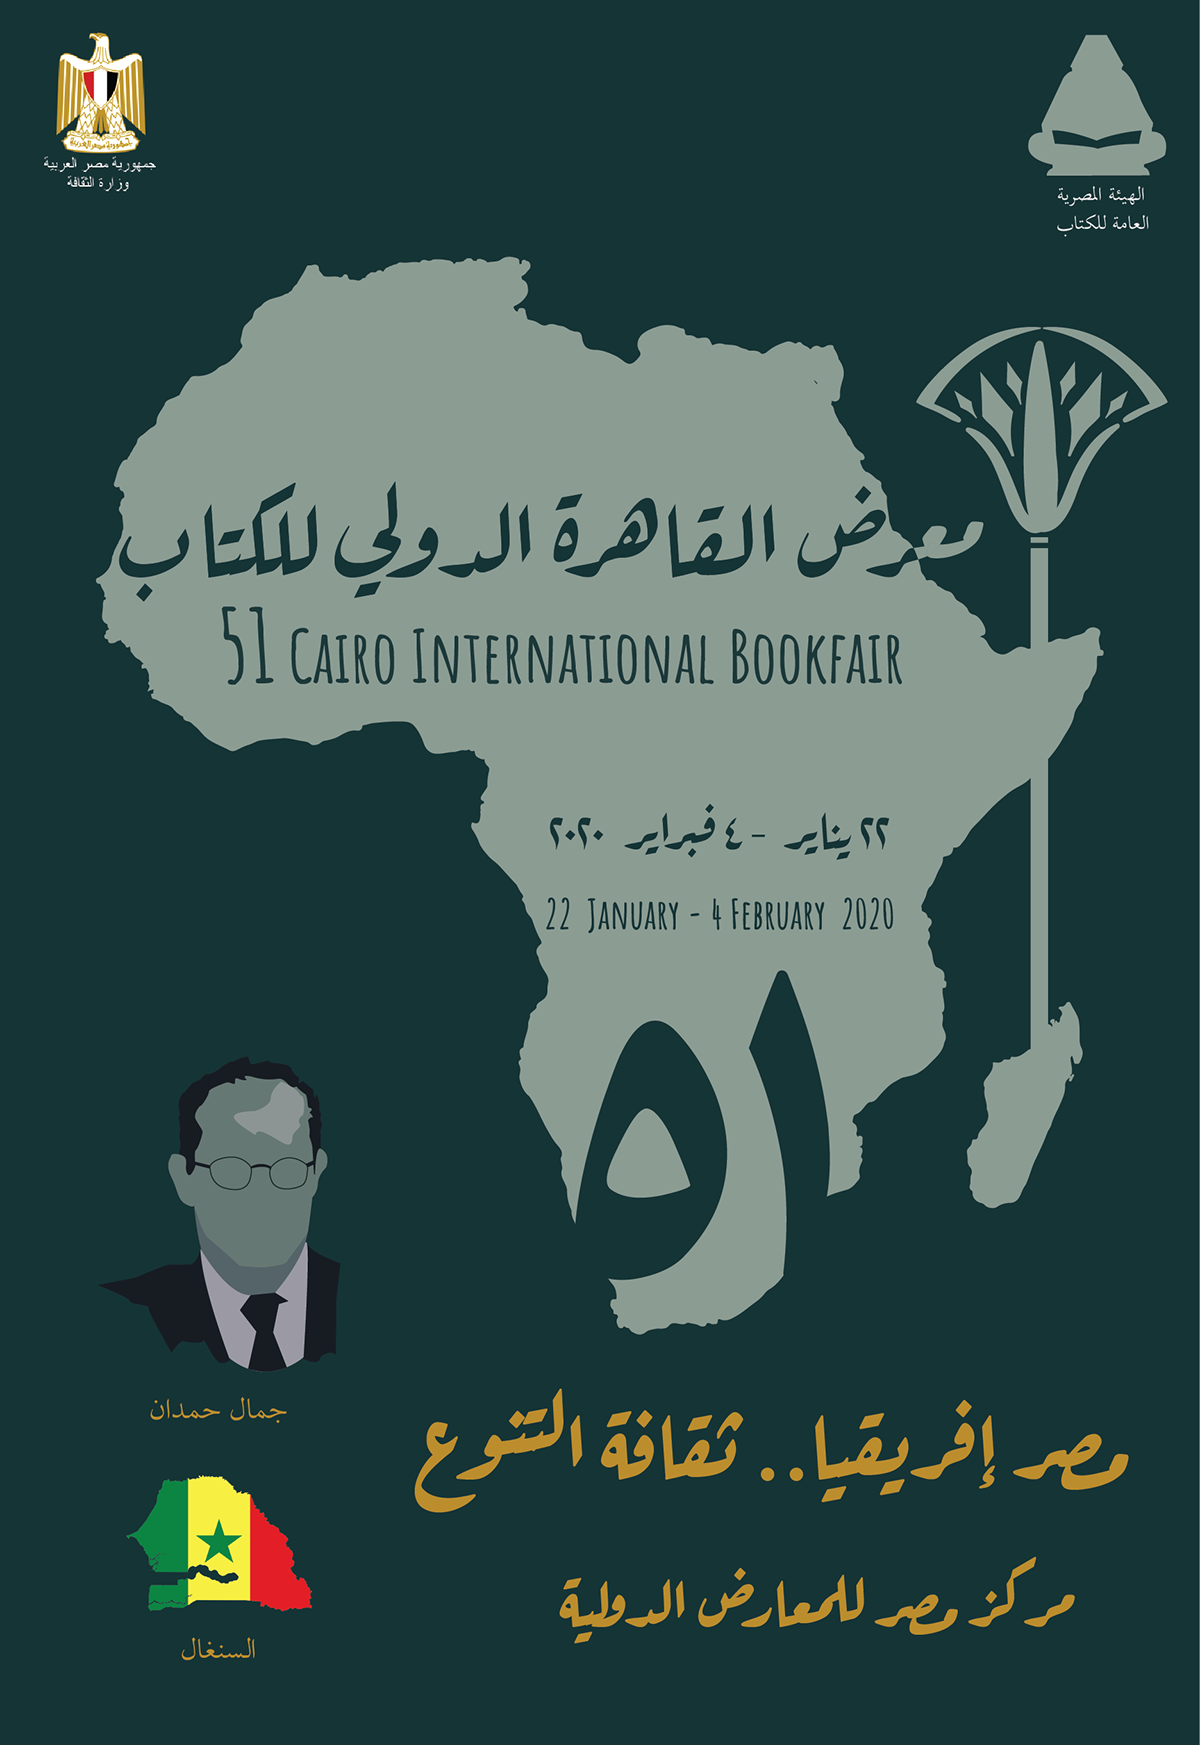 Bookfair Poster Design books International Book Fair cairo cairo book fair egypt africa Book Fair